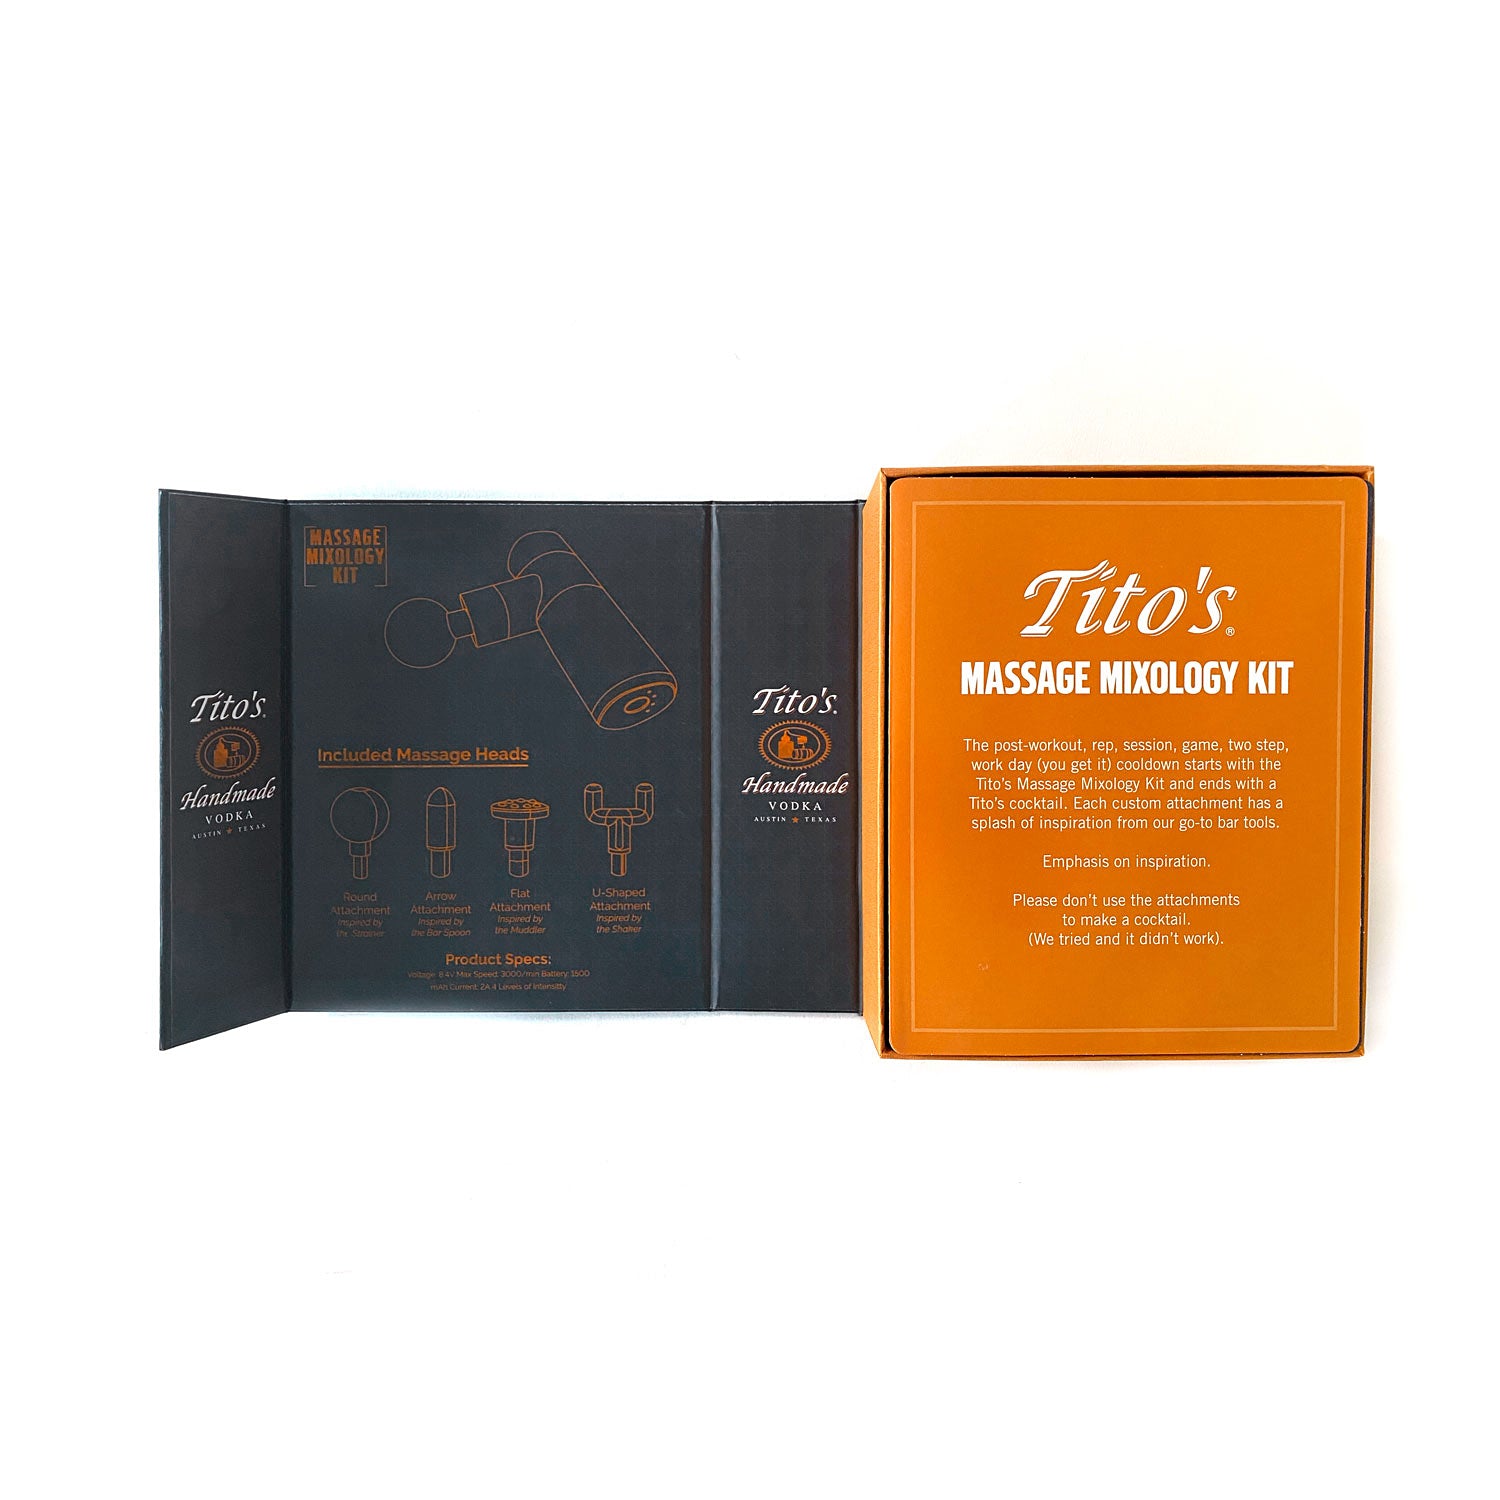 Inside of Tito's Massage Mixology Kit premium packaging box